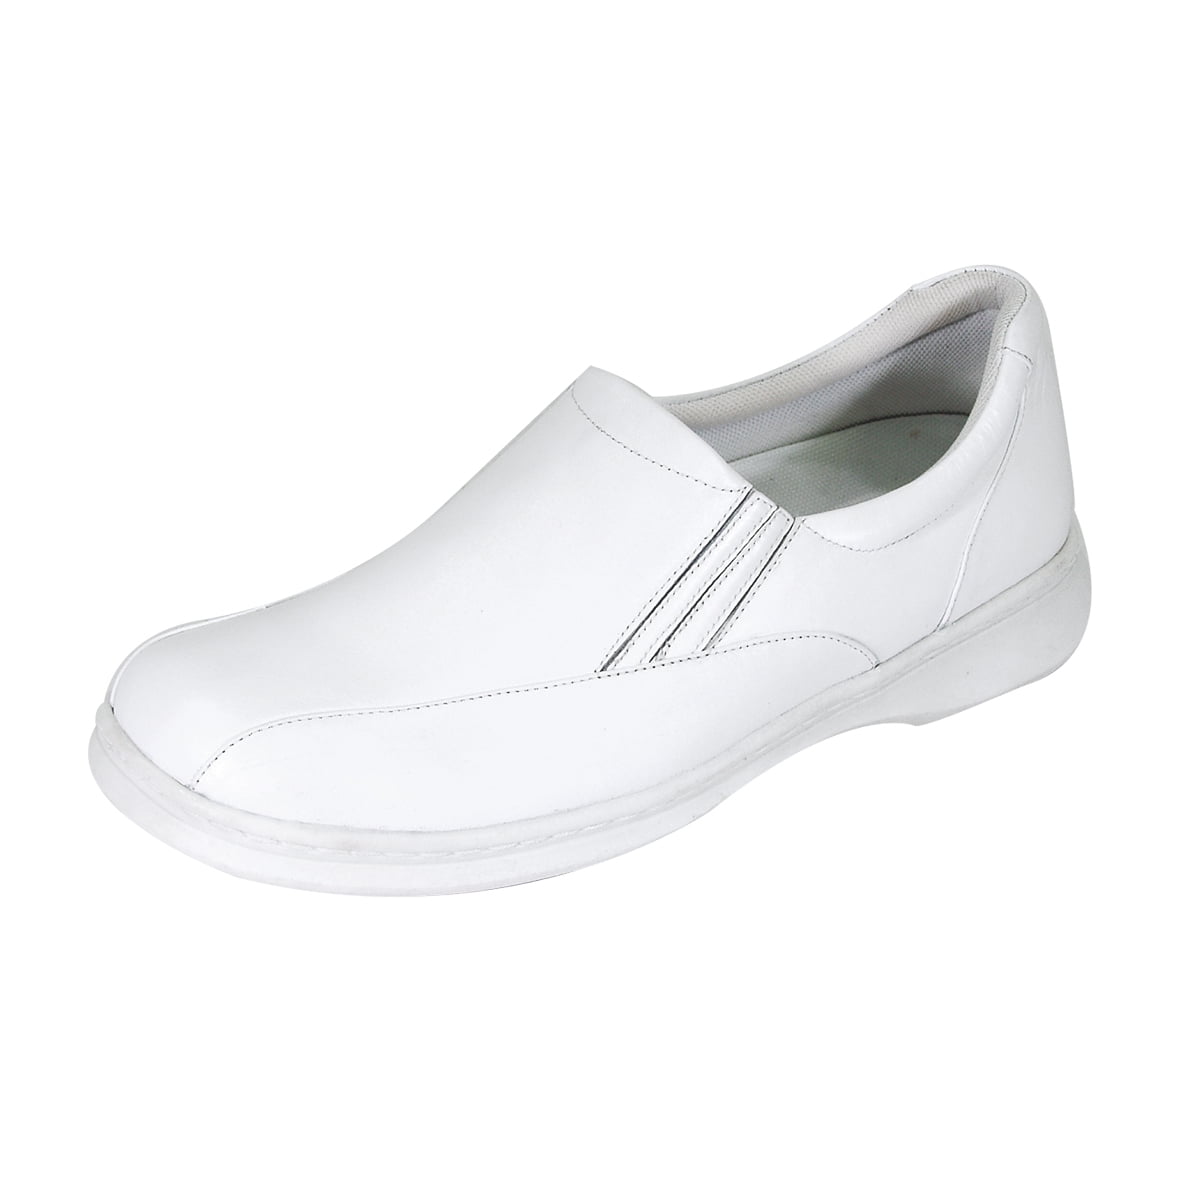 24 HOUR COMFORT Blaire Wide Width Professional Sleek Shoe WHITE 9 ...